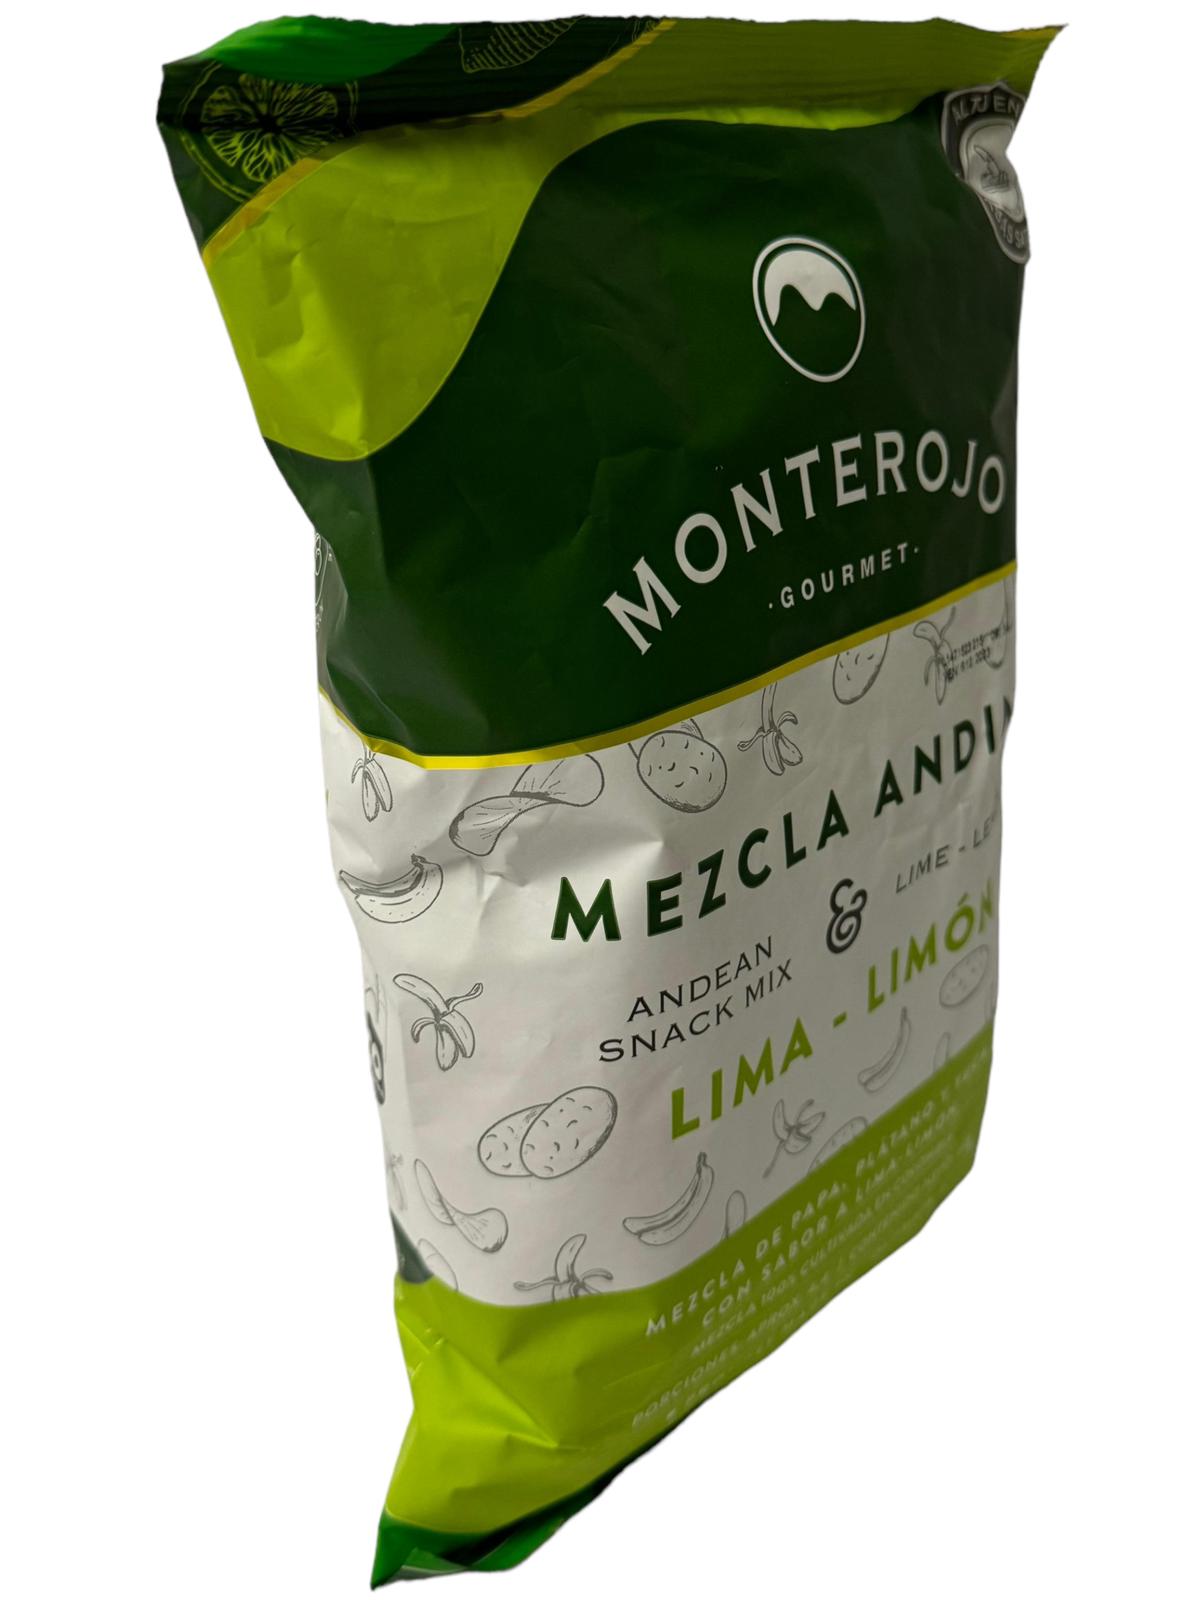 Monterojo Mezcla Andina Lima  Lime Flavoured Snack Mix 110g